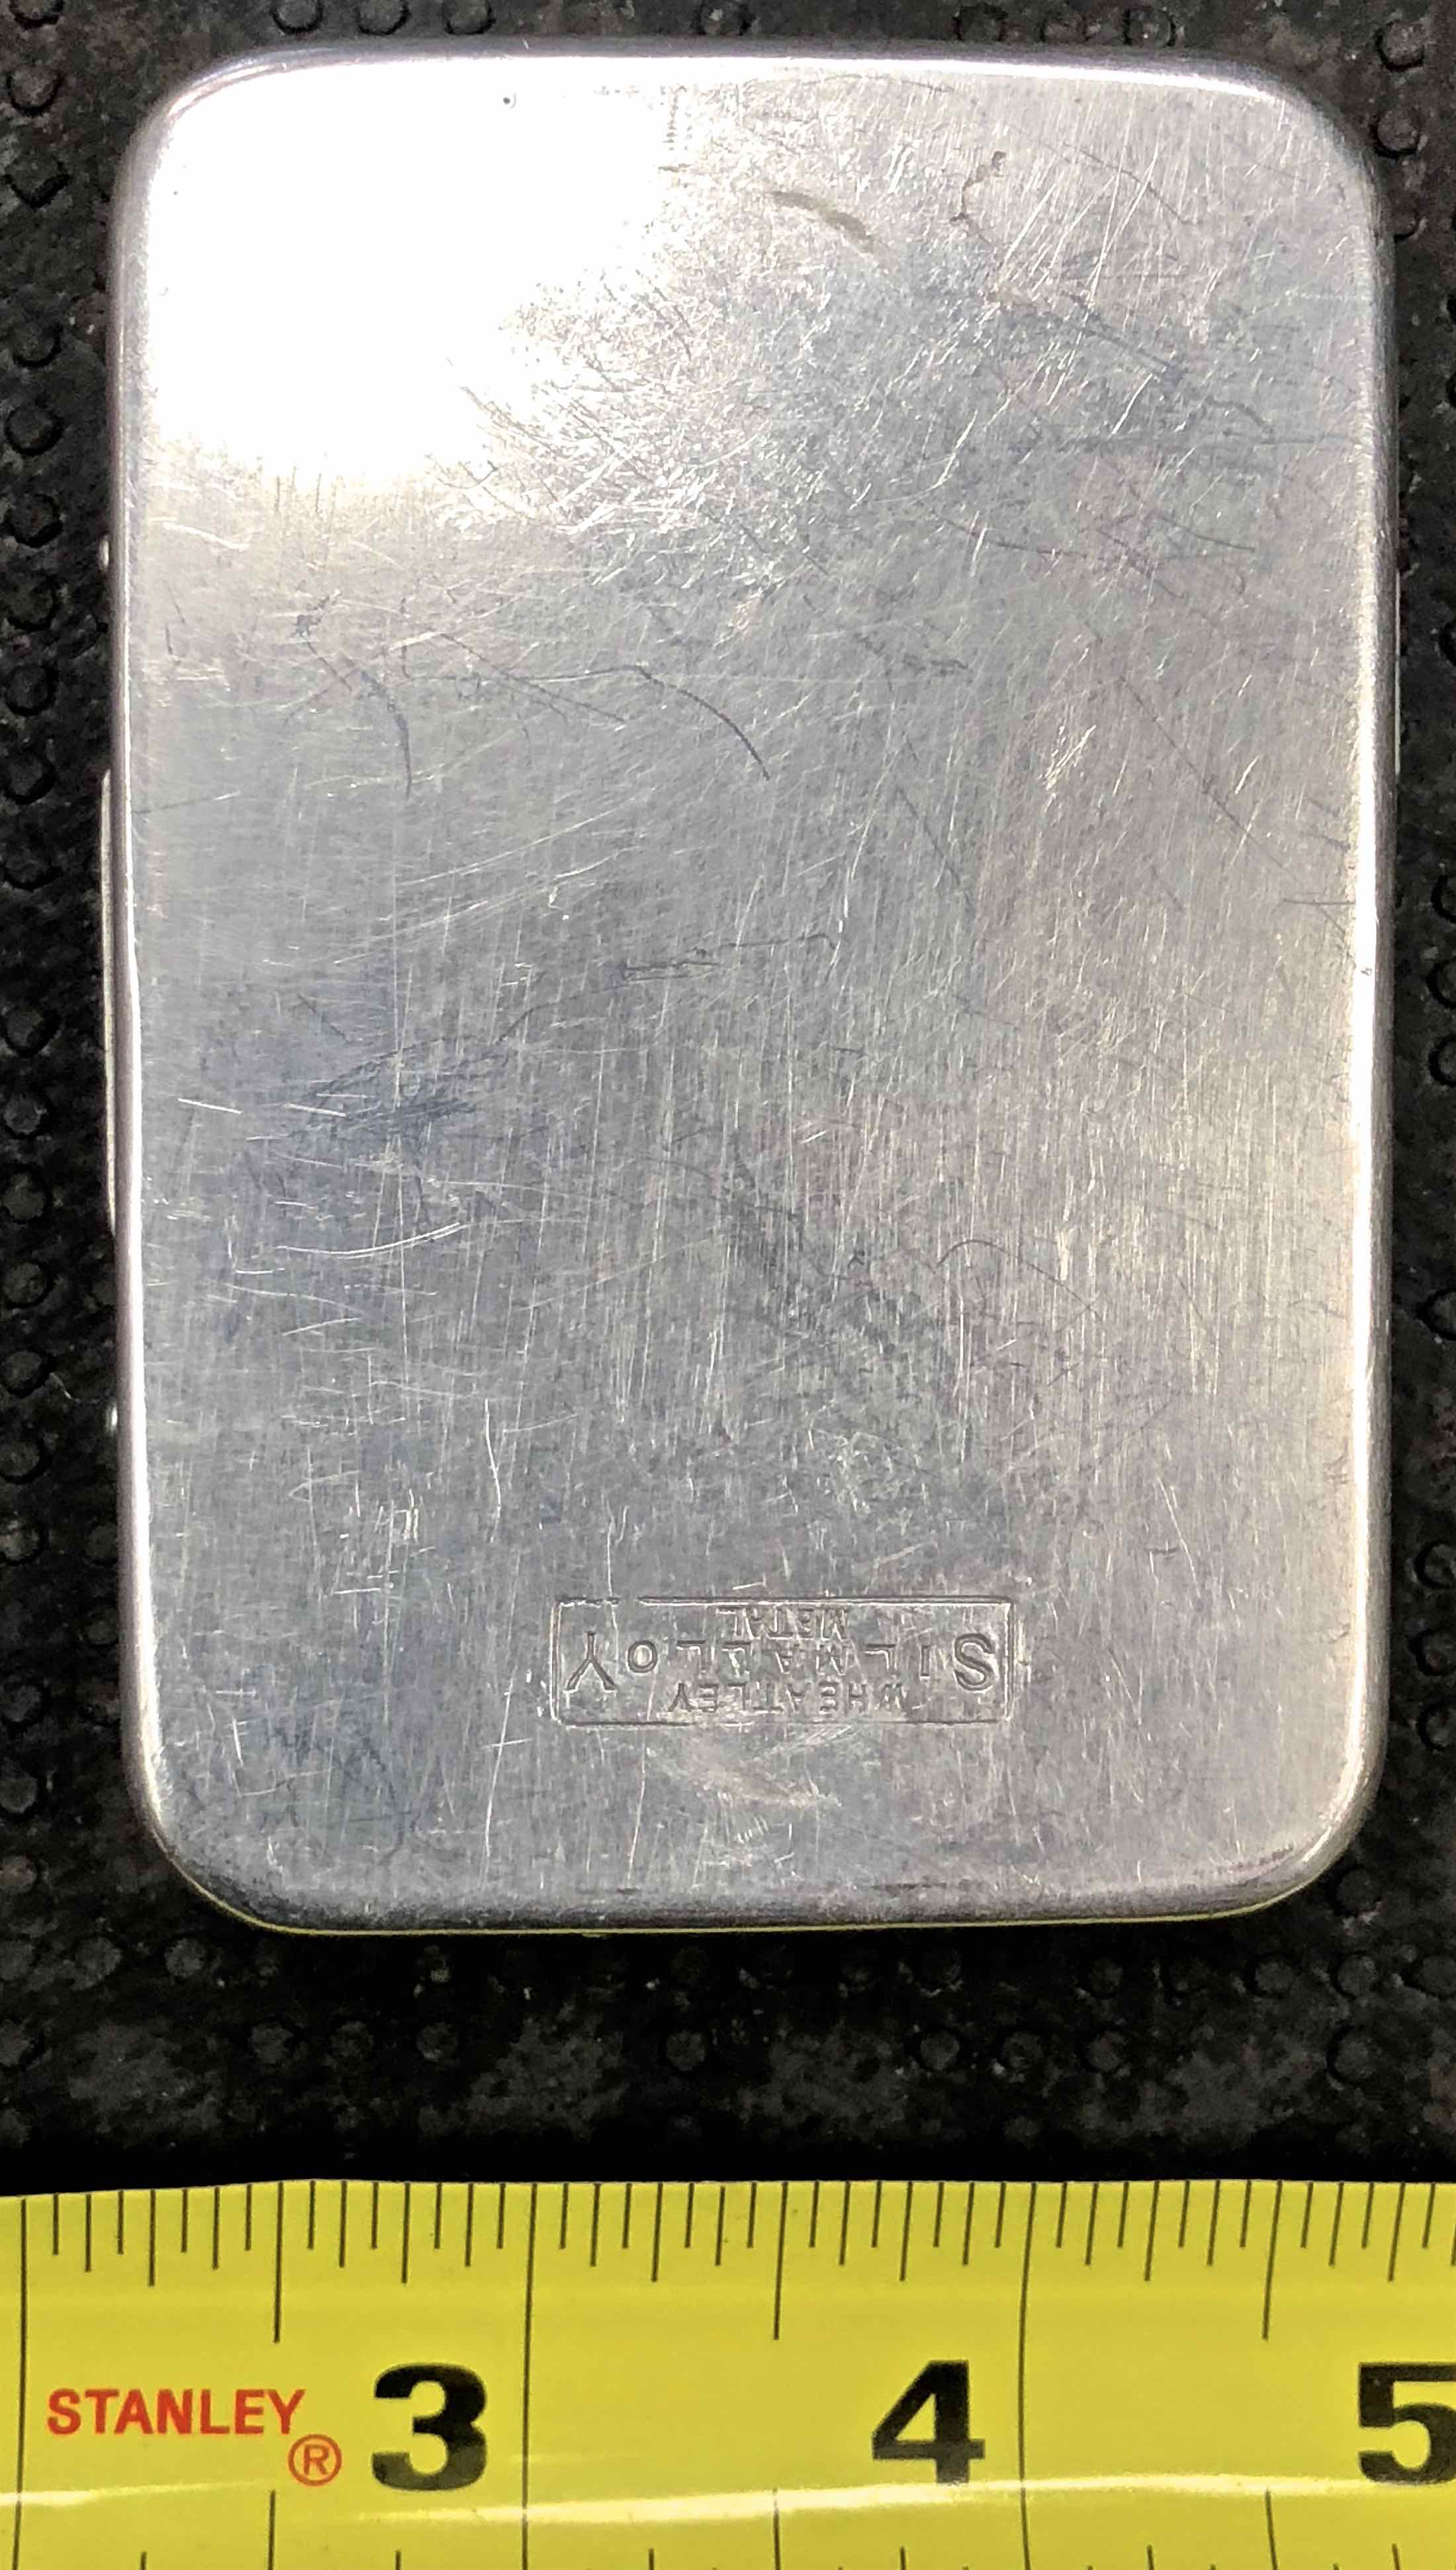 Richard Wheatley - Silver Aluminum Fly Box - 6 compartments 3 1/2" x 3 1/2" x 3/4" - GOOD CONDITION! - $25